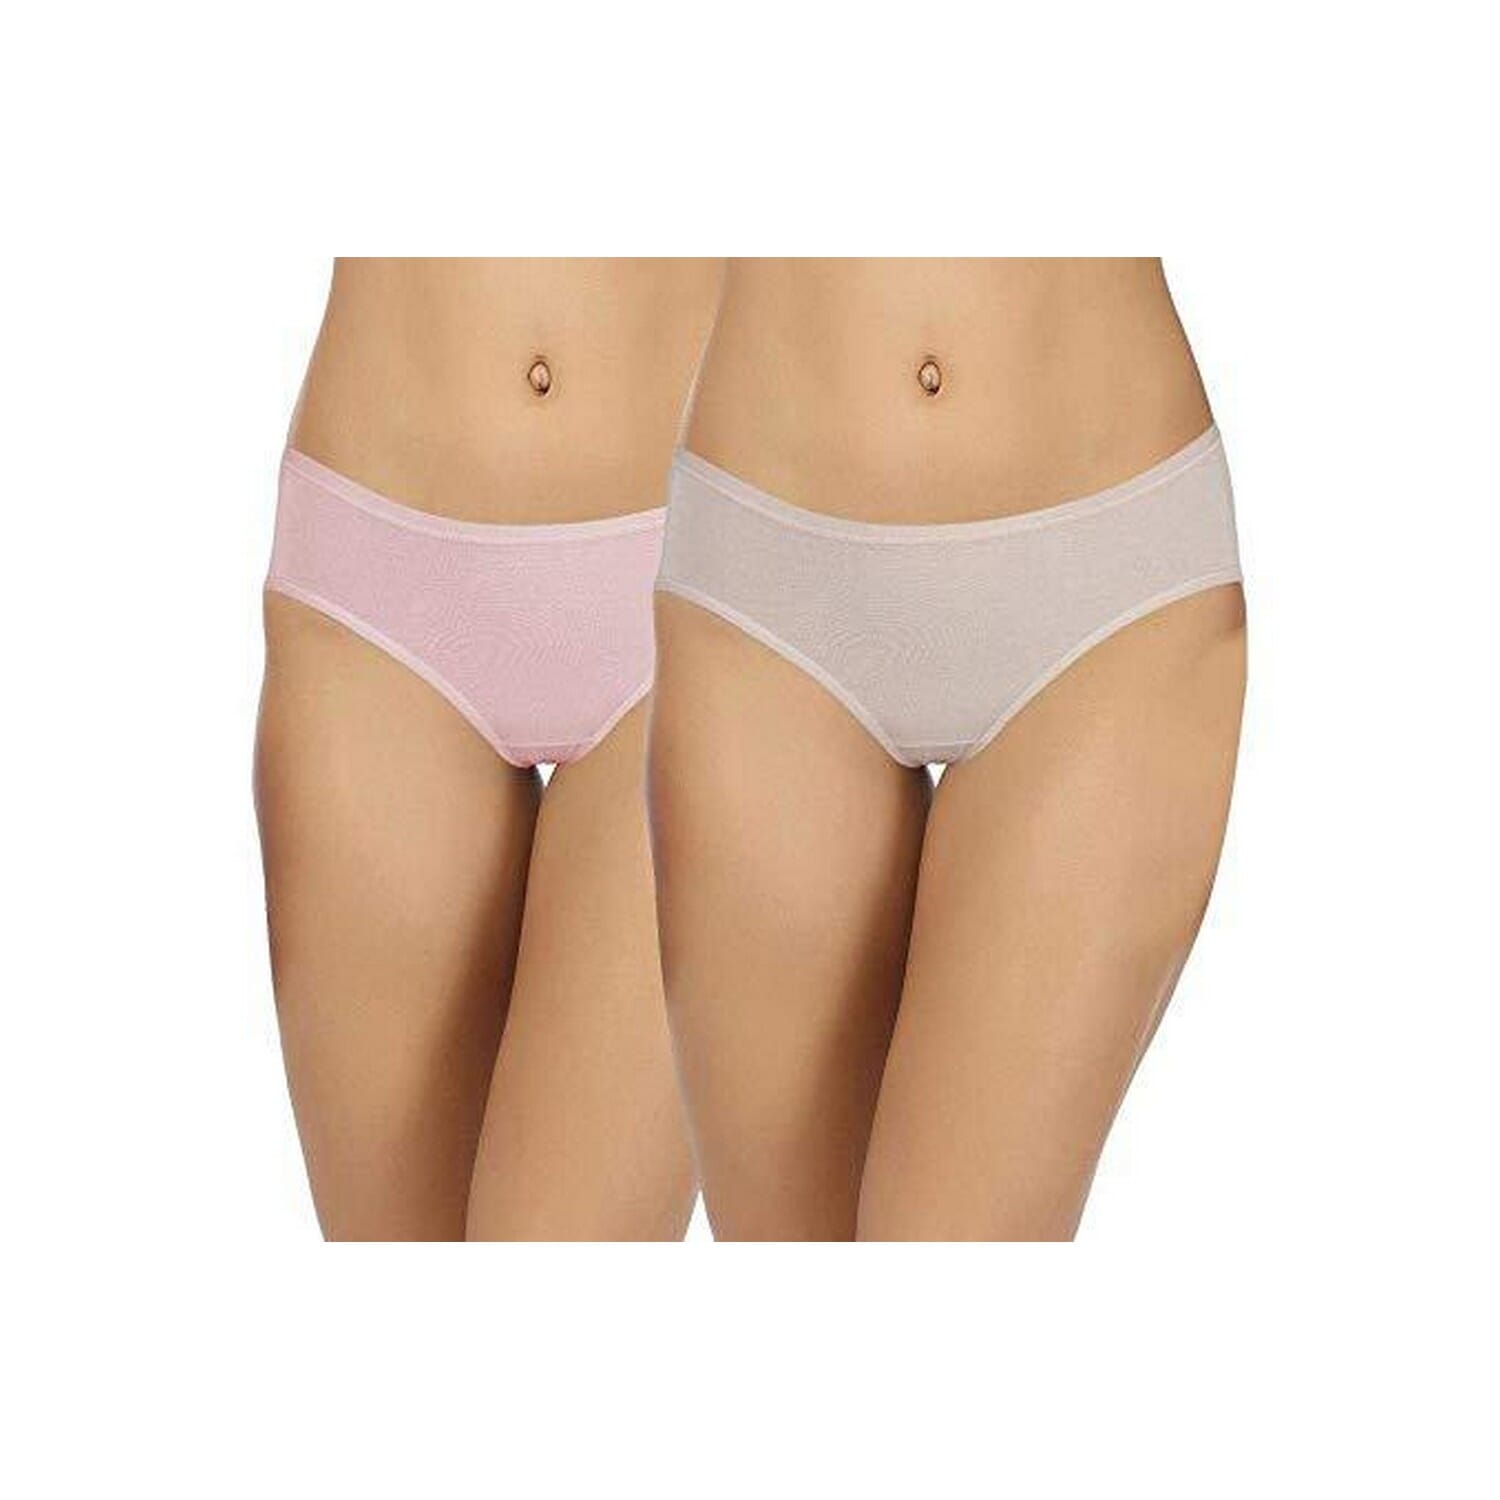 Box Of 2 Women And Girls Super Soft Cotton Modal Fabric Panty Underwear